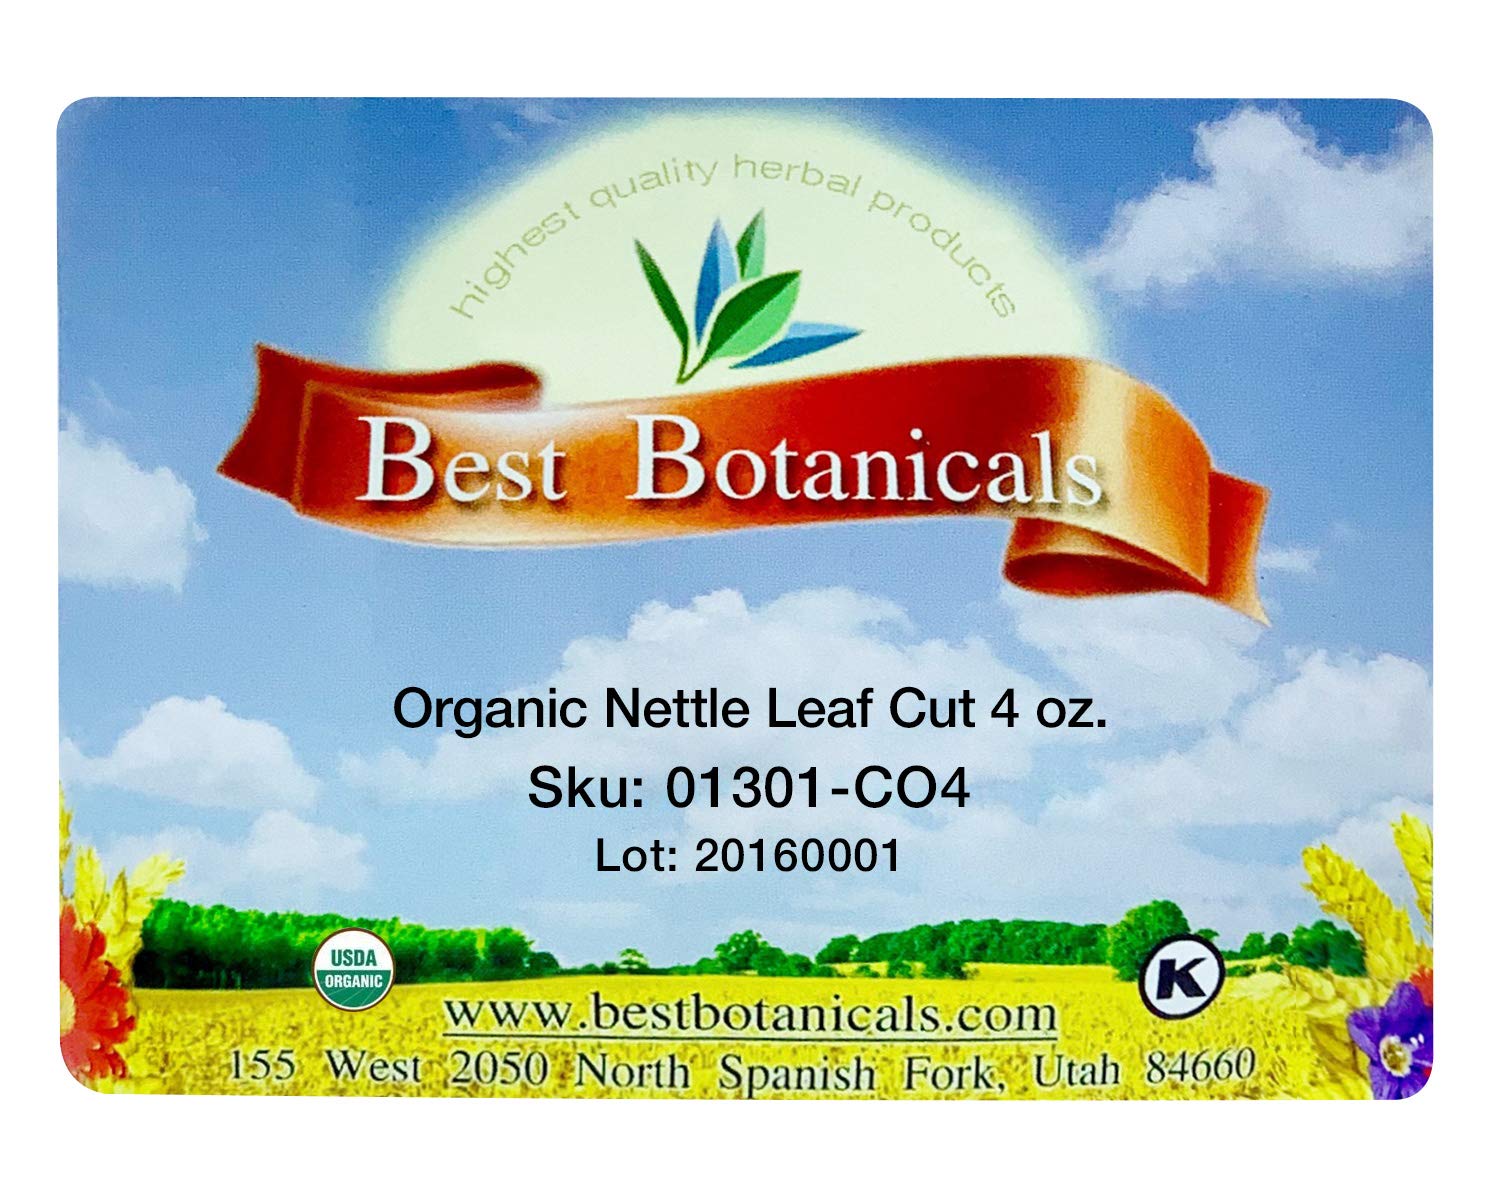 Best Botanicals Nettle Leaf Cut 4 oz. (Organic)